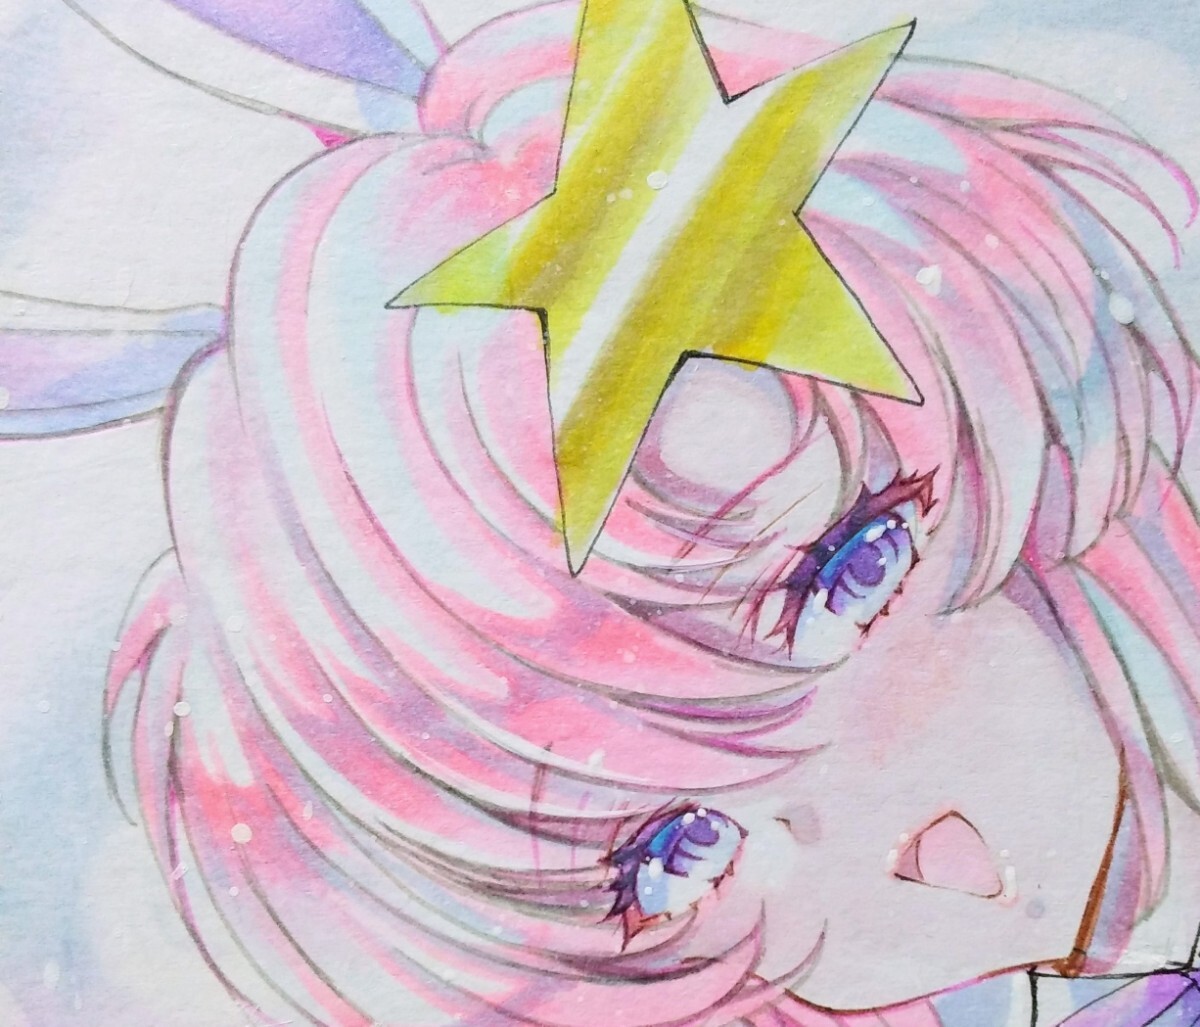 Papier coloré [Meer Campbell Bunny Gundam] Bunny Girl Doujin Illustration originale dessinée à la main Illustration de fille, des bandes dessinées, produits d'anime, illustration dessinée à la main